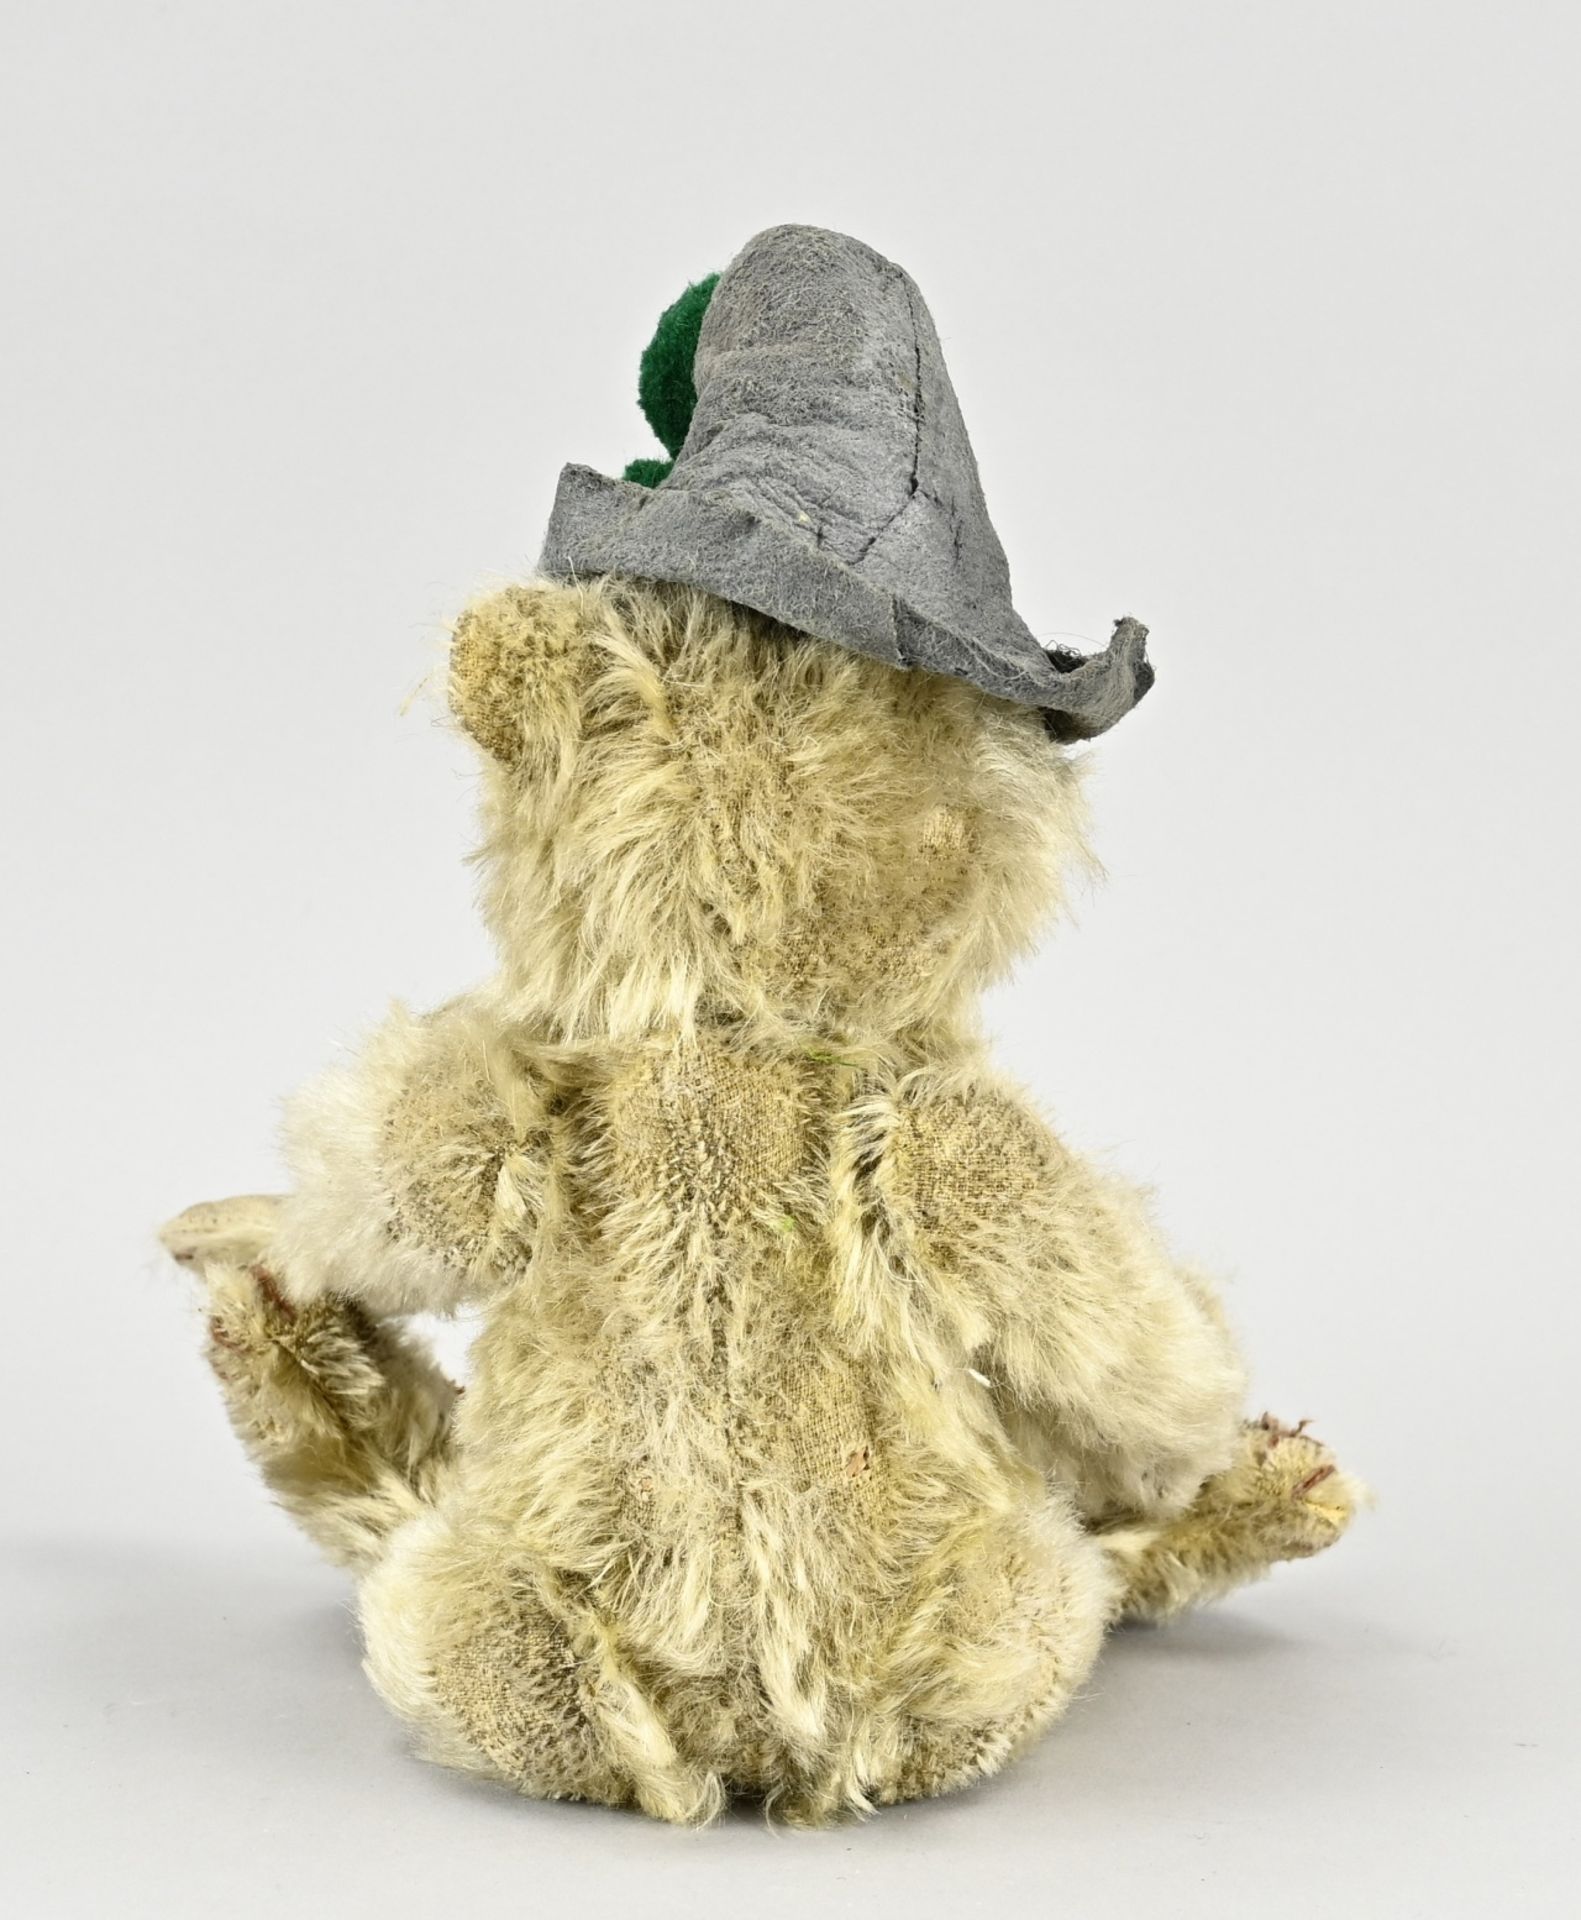 Antique Steiff teddy bear - Image 2 of 2